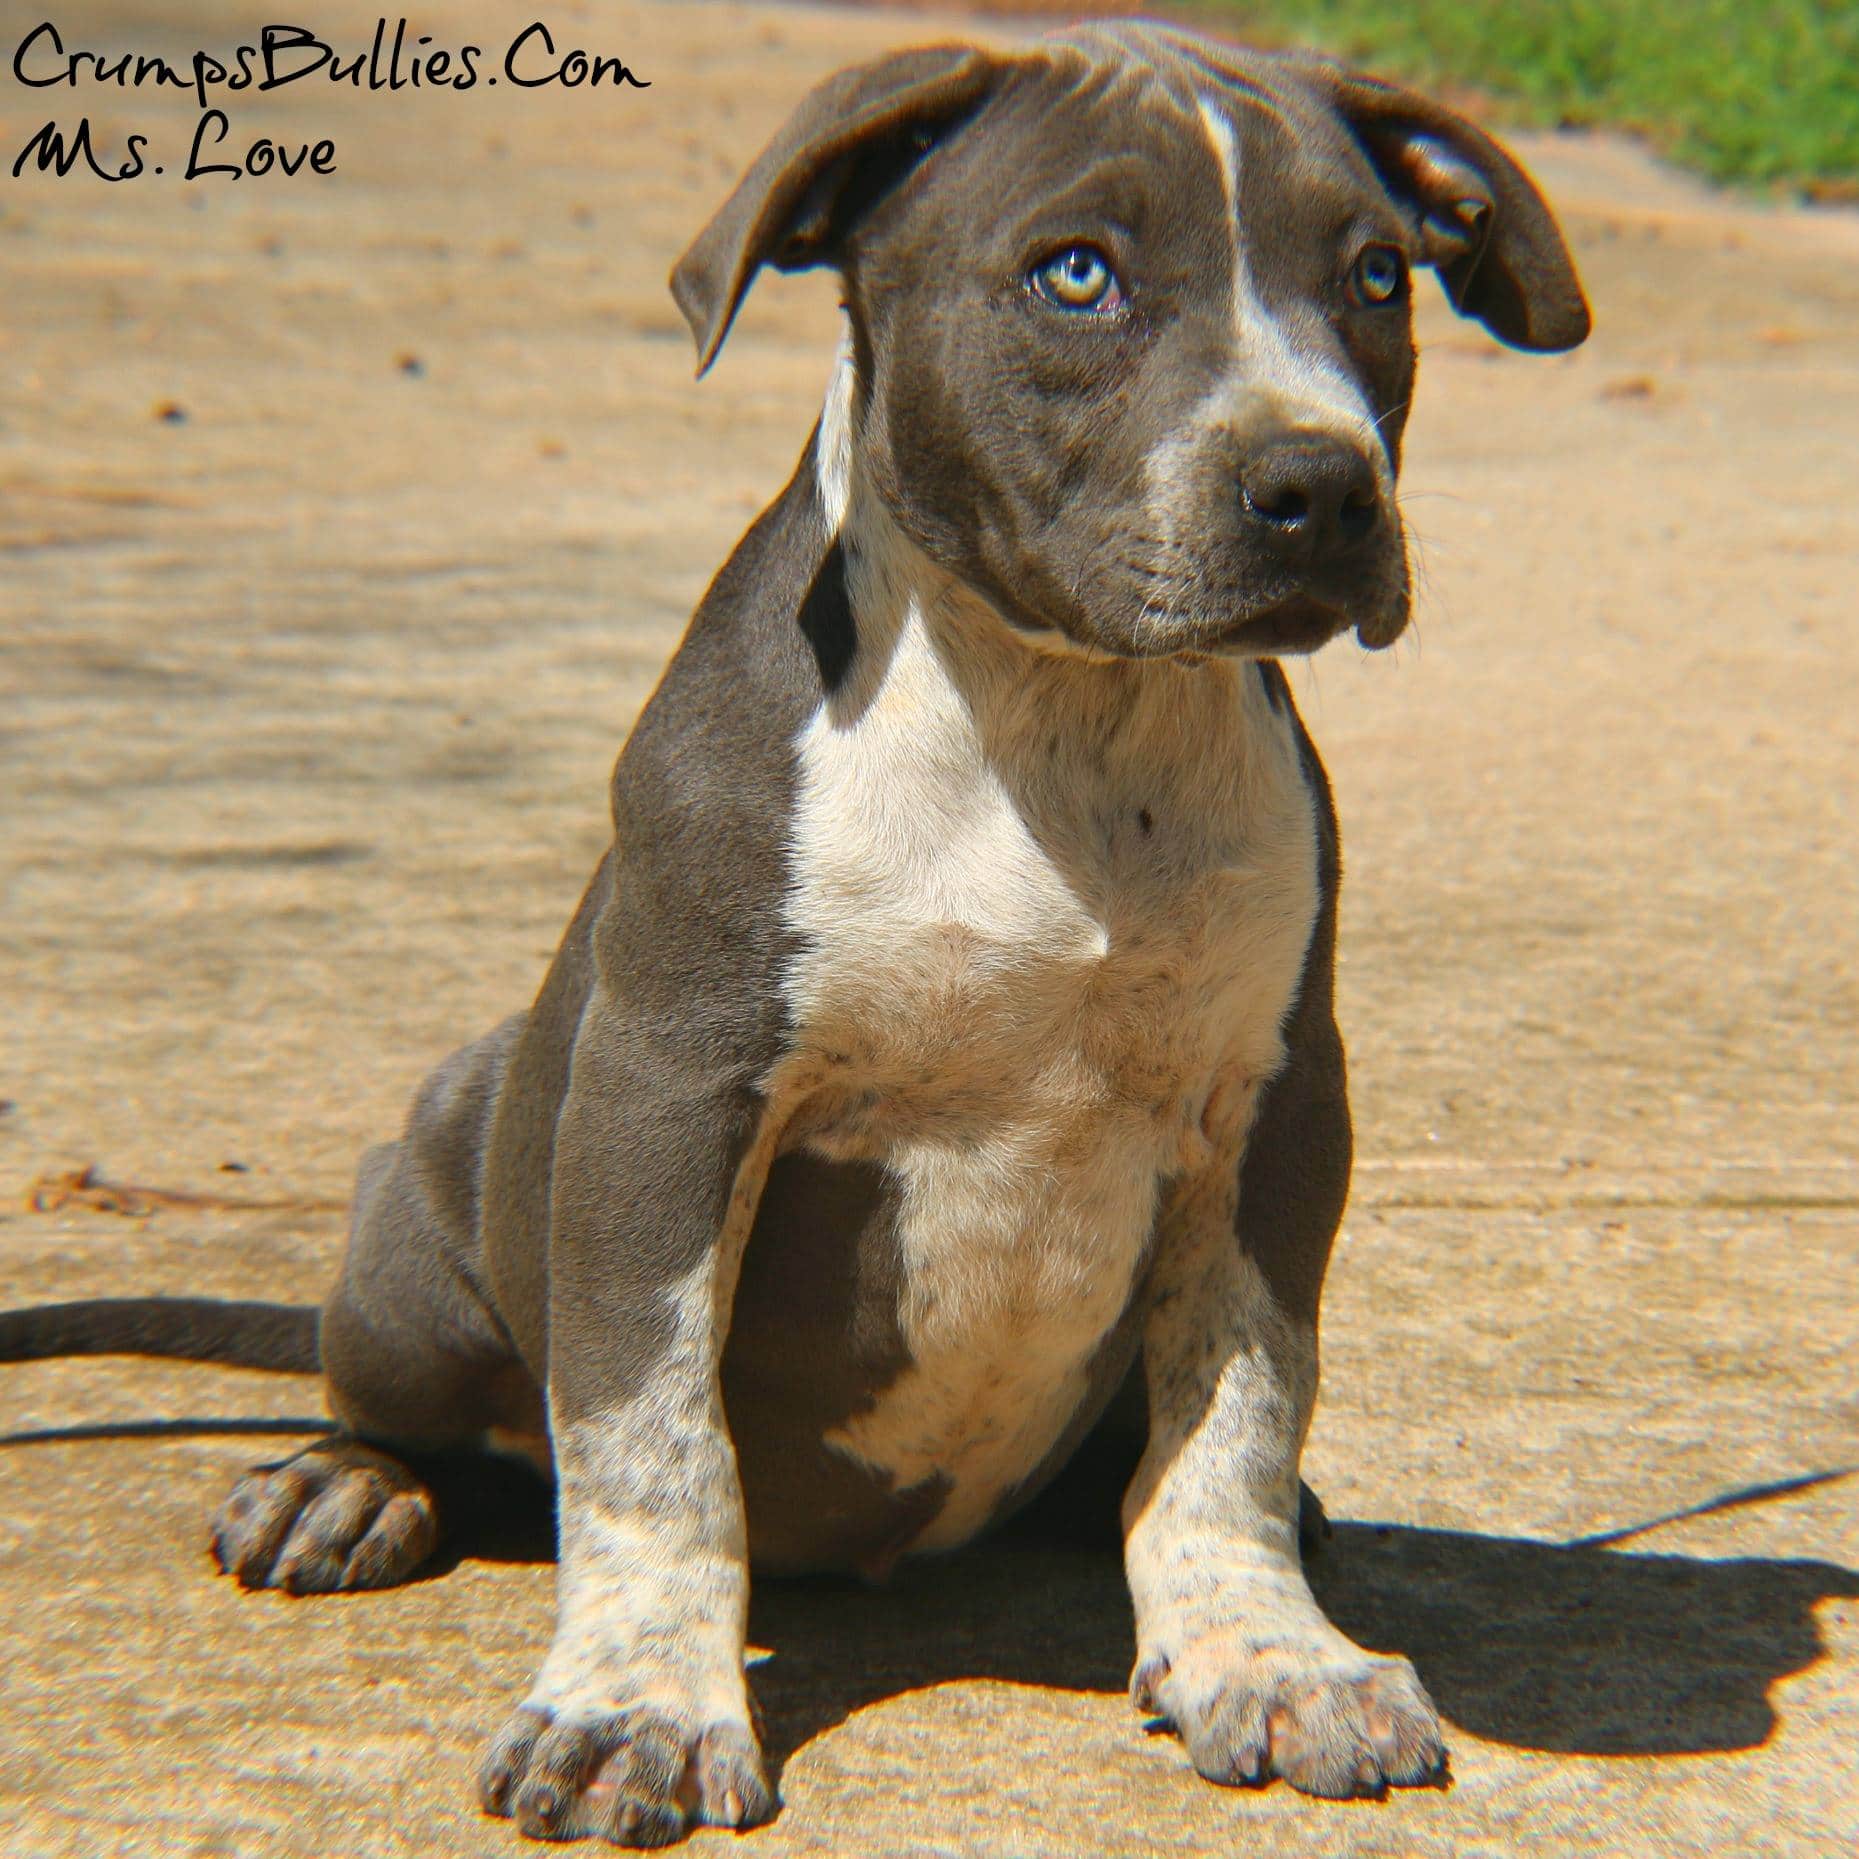 American Bully Pitbull Puppy for sale (Ms Love) Crump's